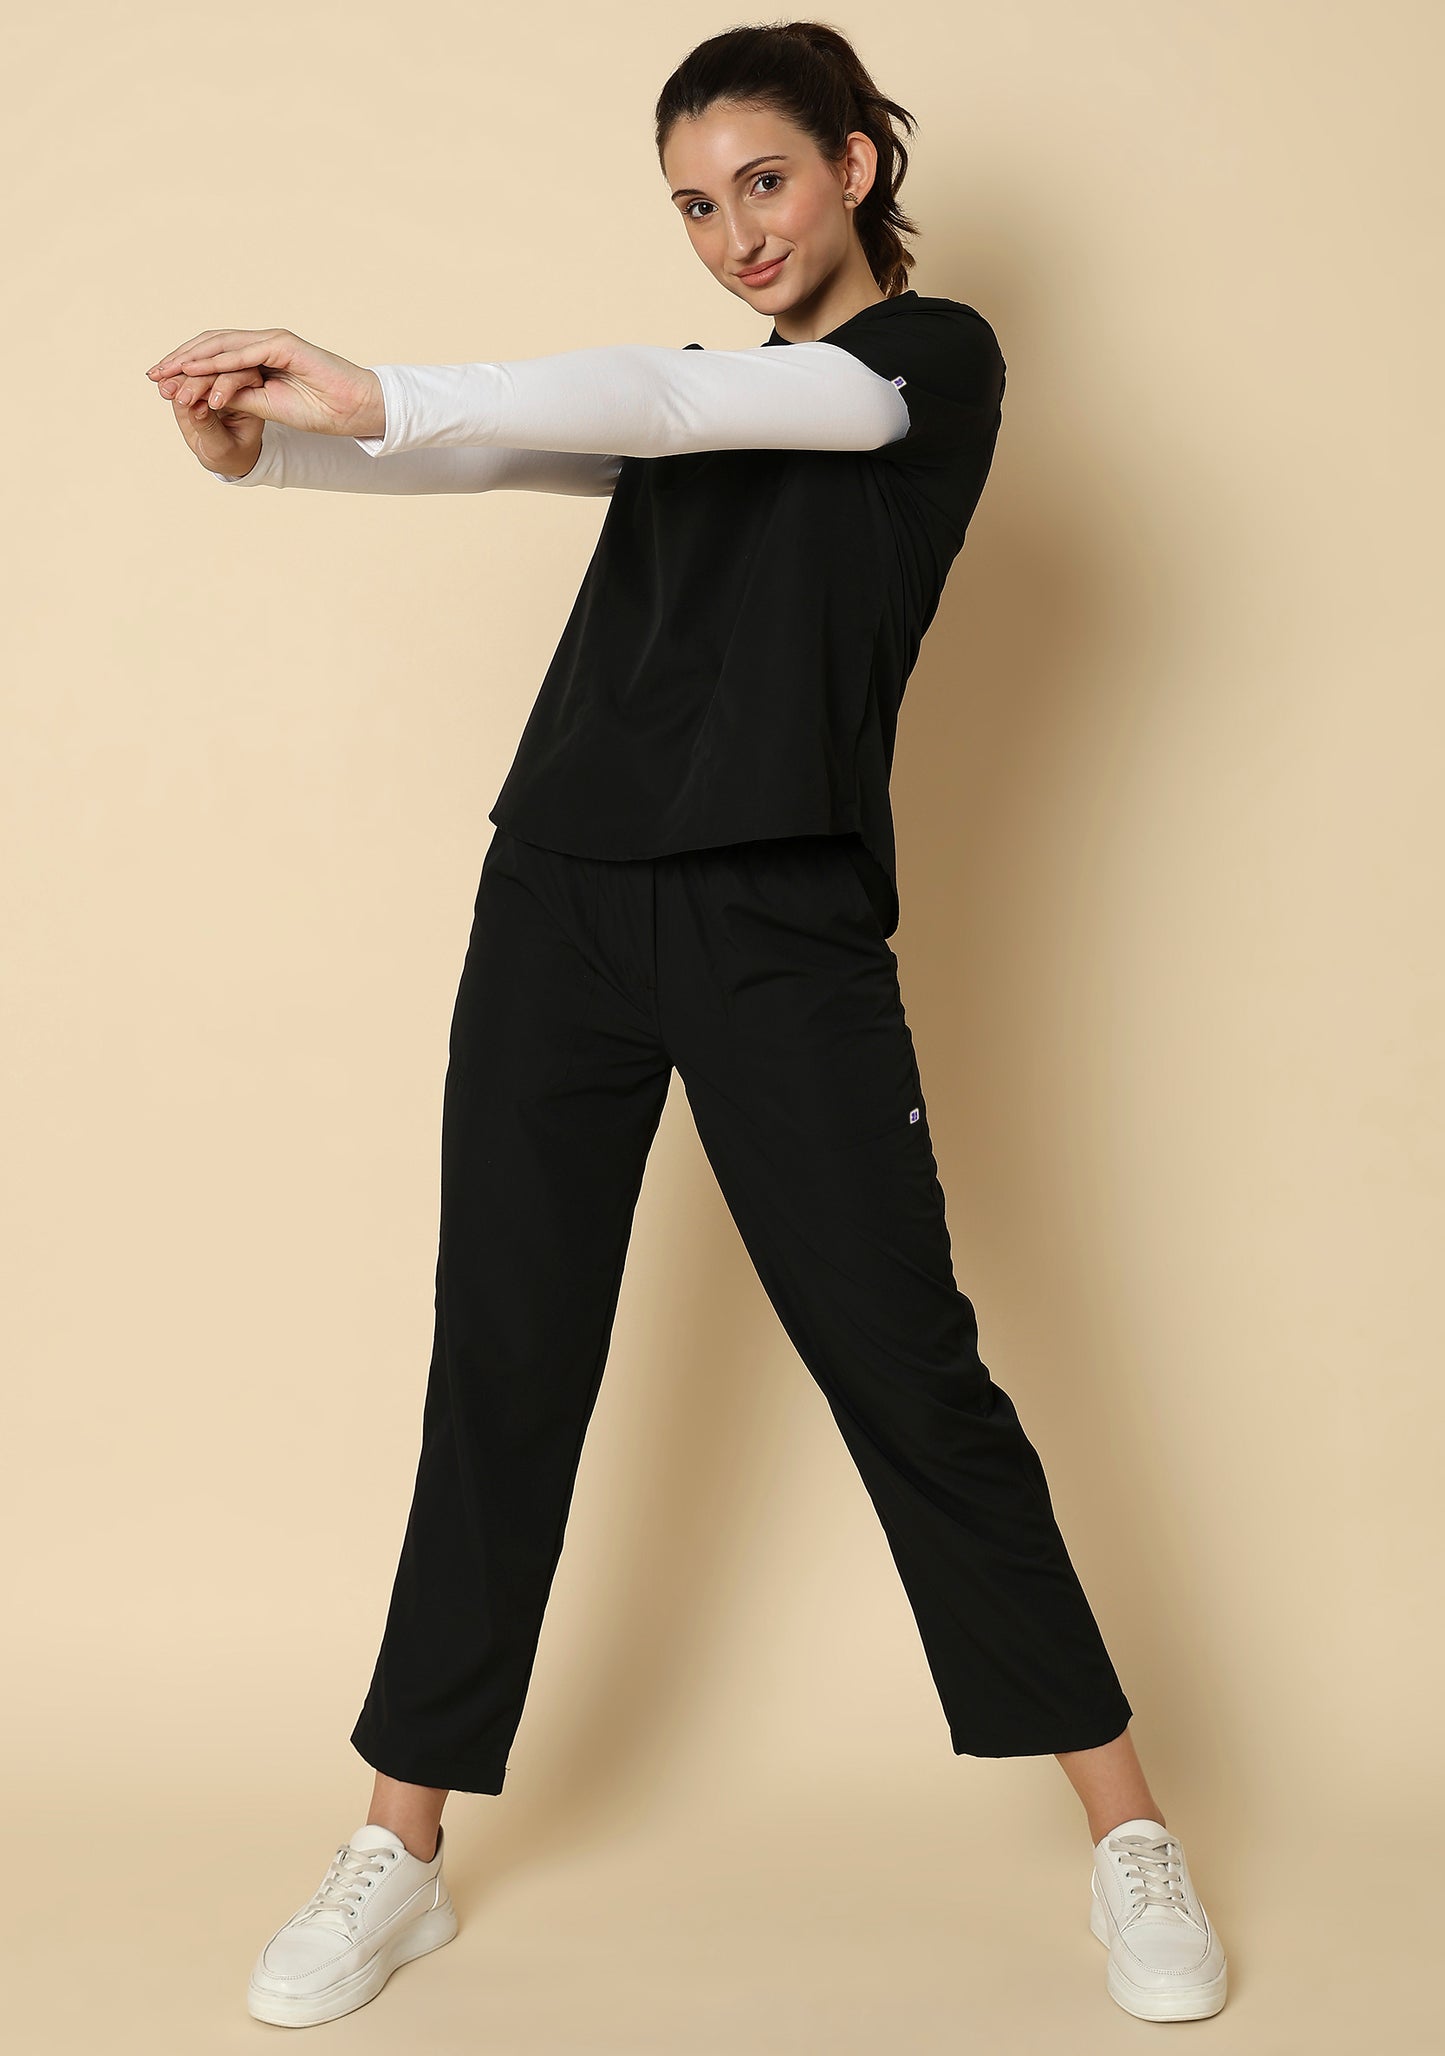 Classic Women's 5-Pocket Mandarin Collar (Black) Scrub